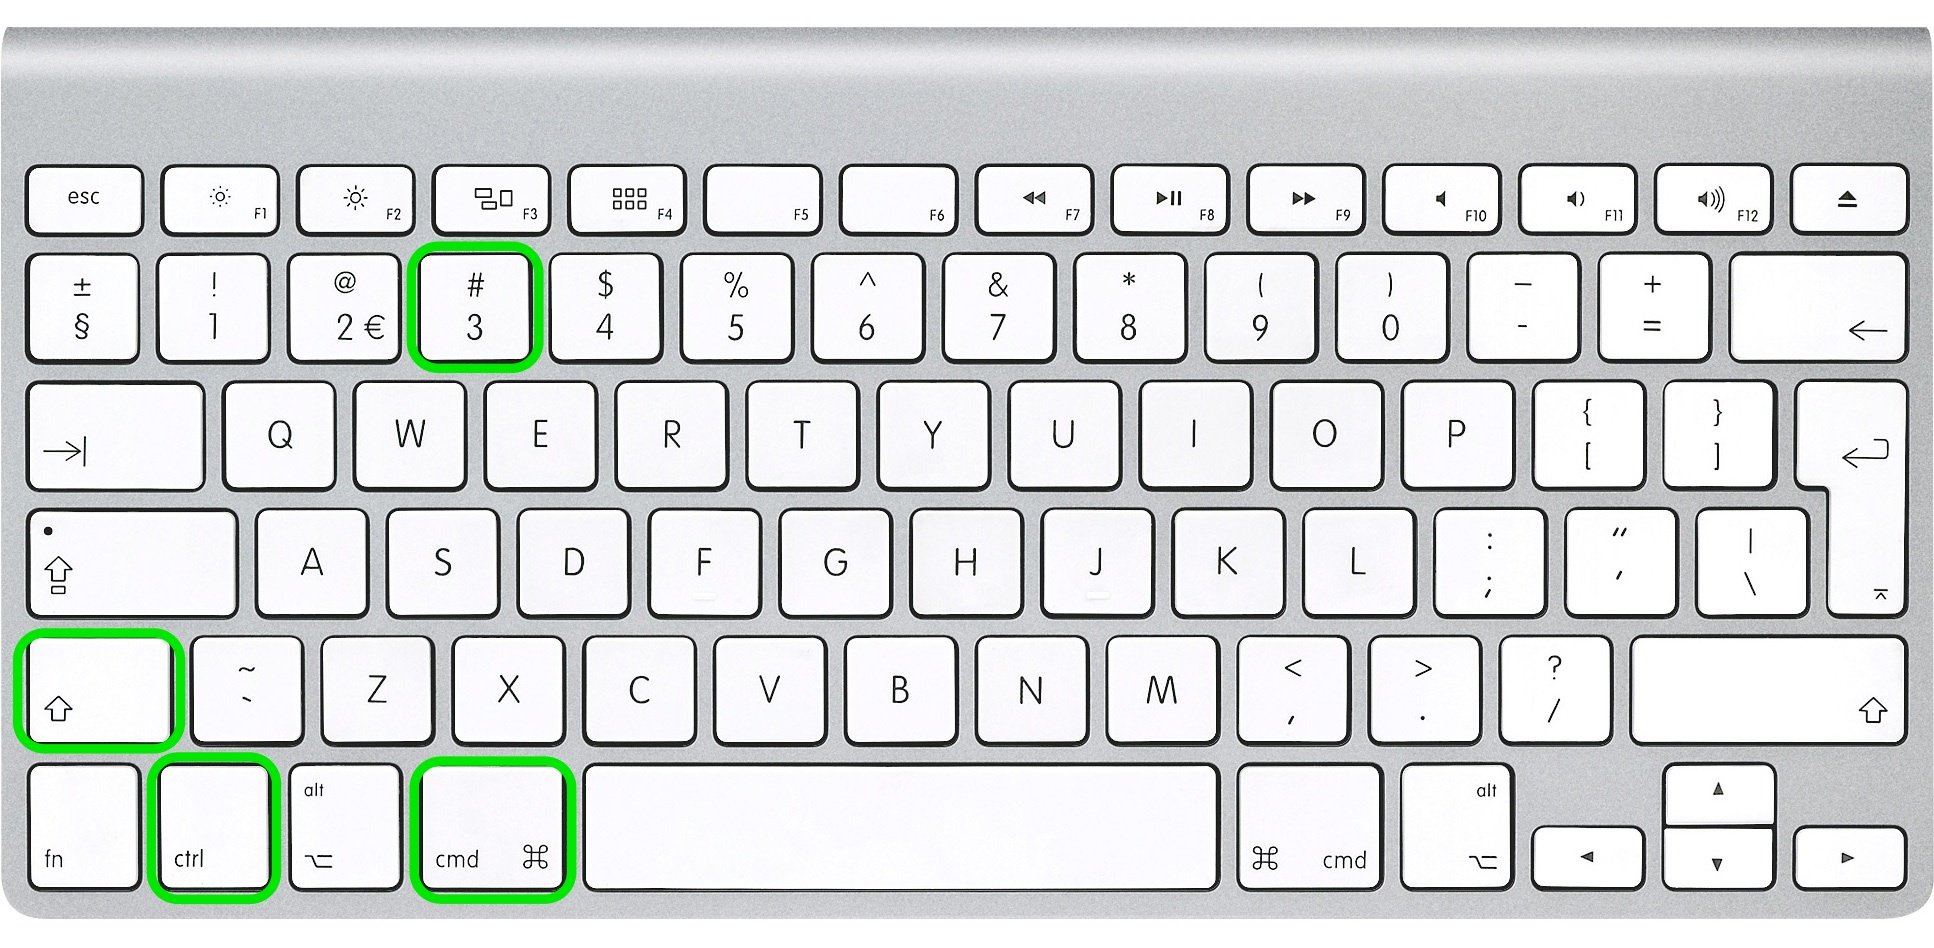 Apple keyboard shortcuts command